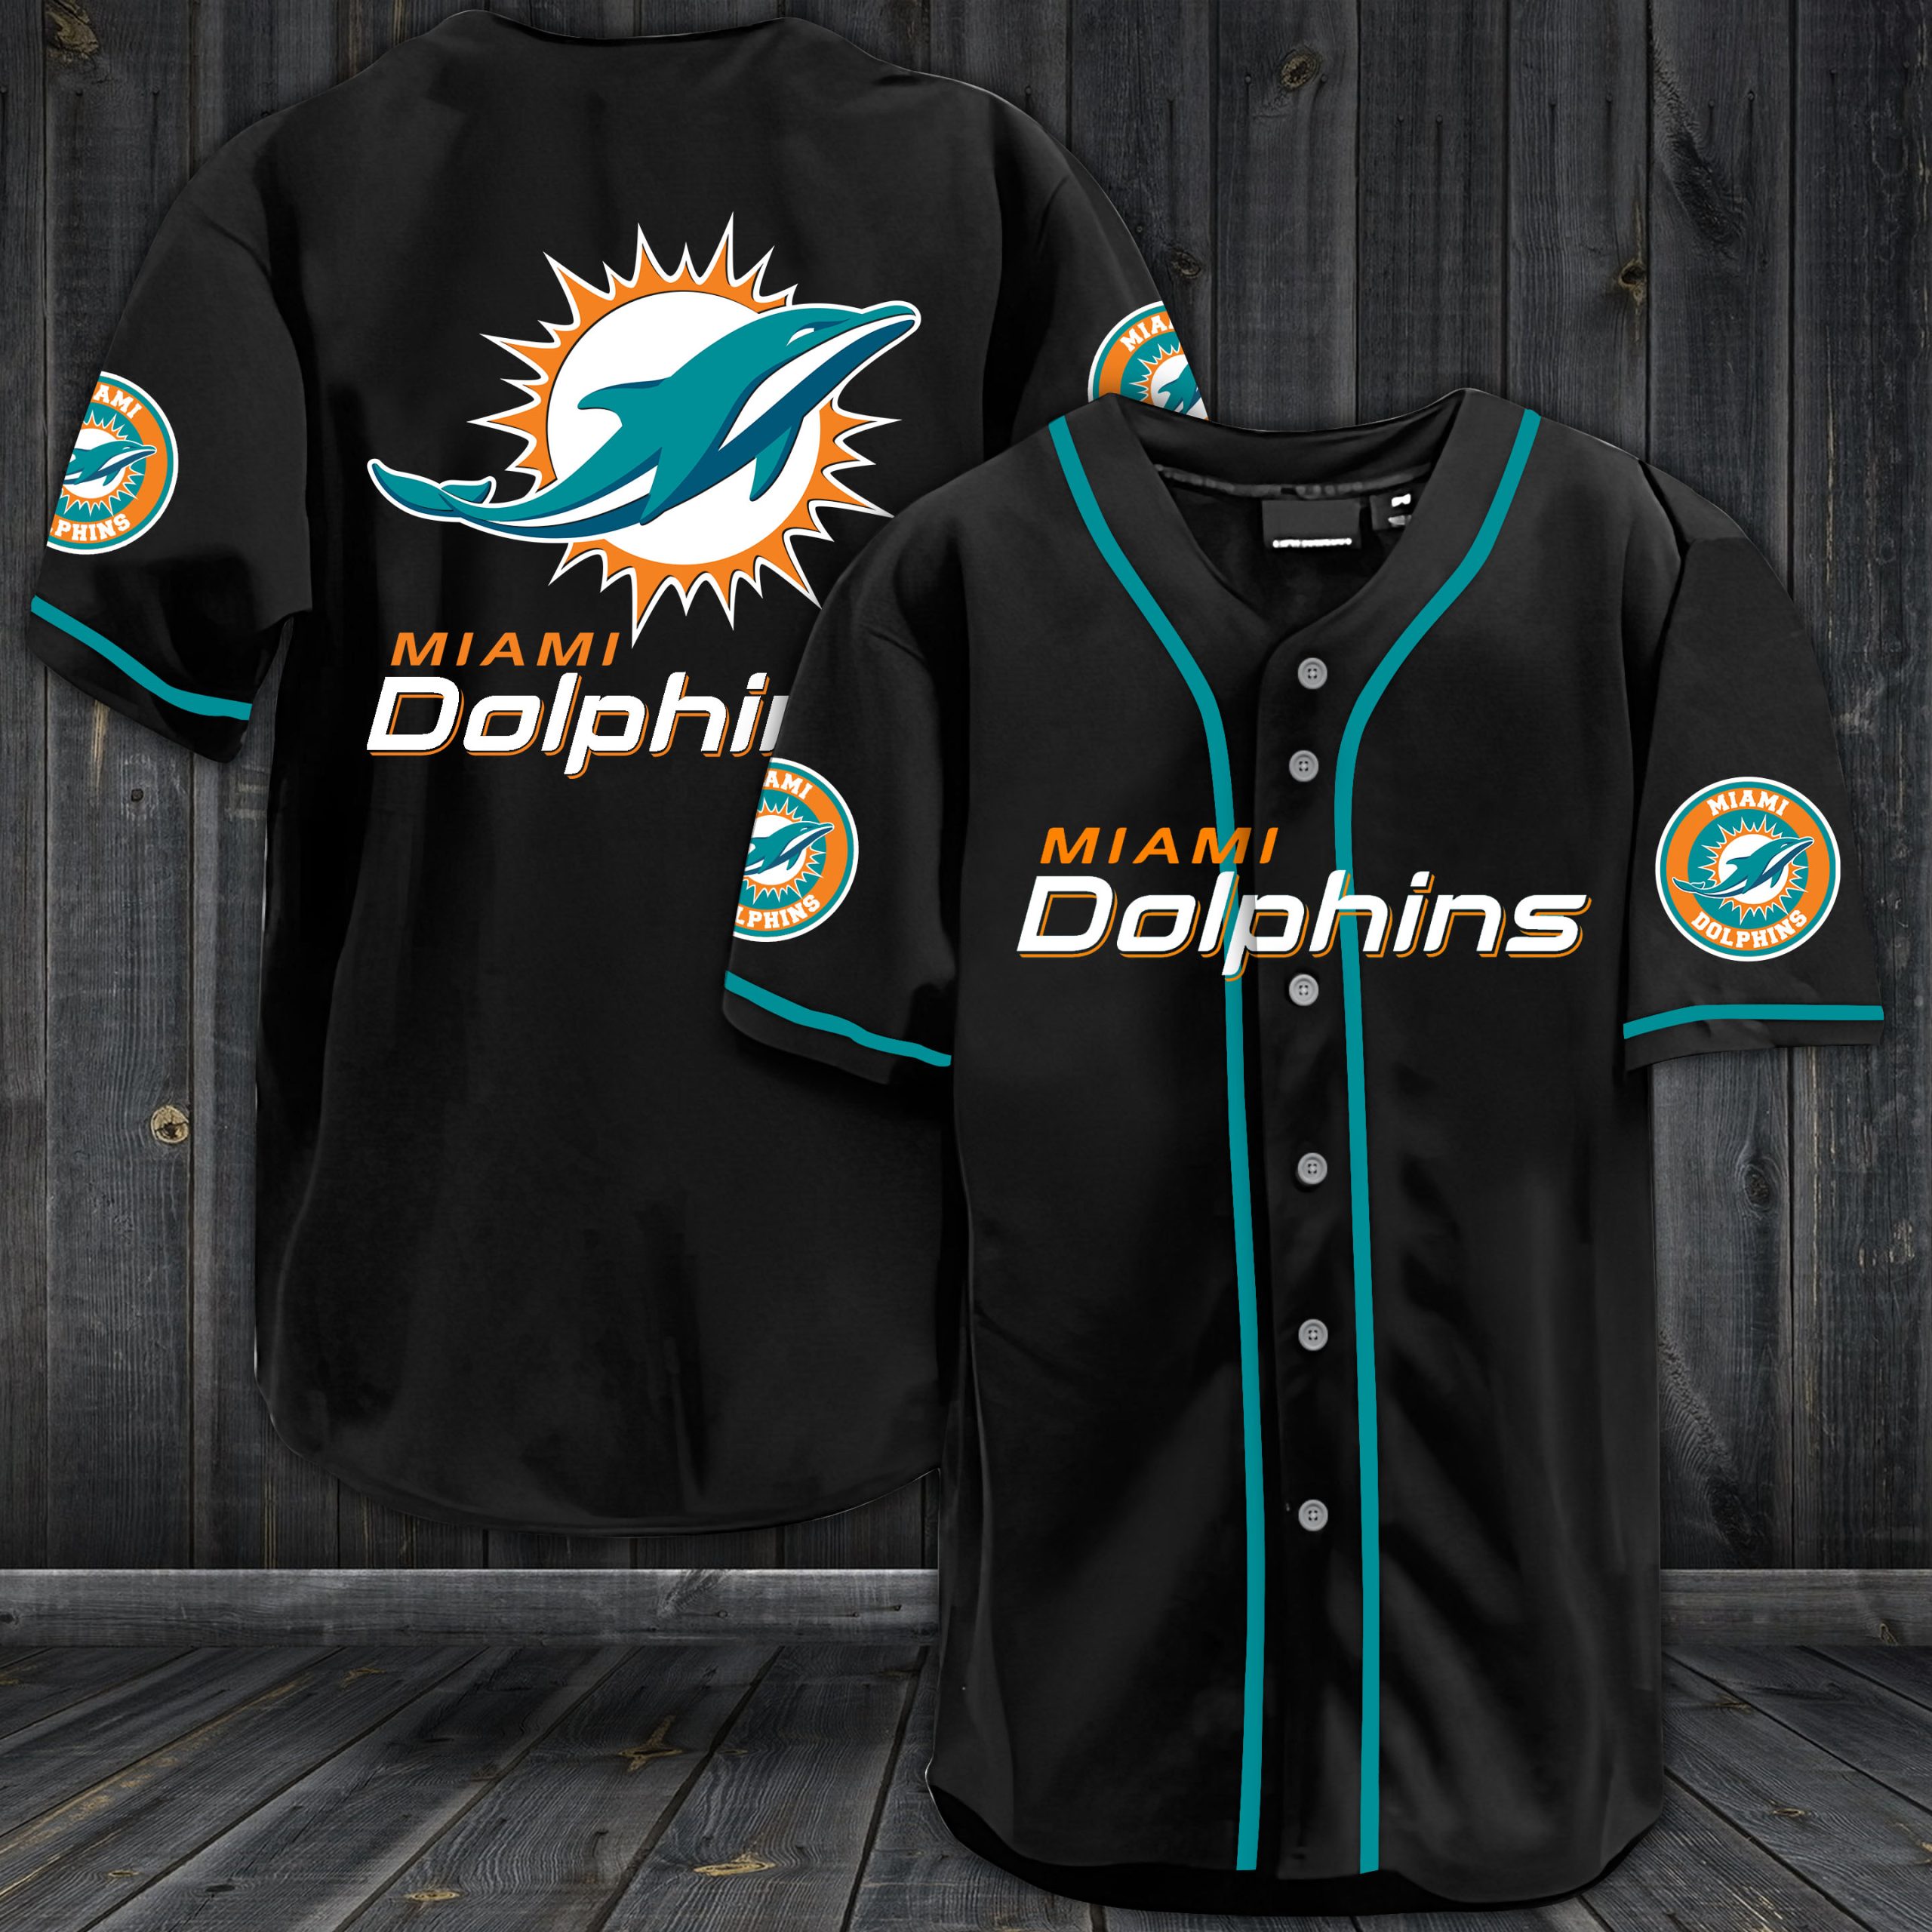 Miami Dolphins Baseball Jersey Shirts Sports Black